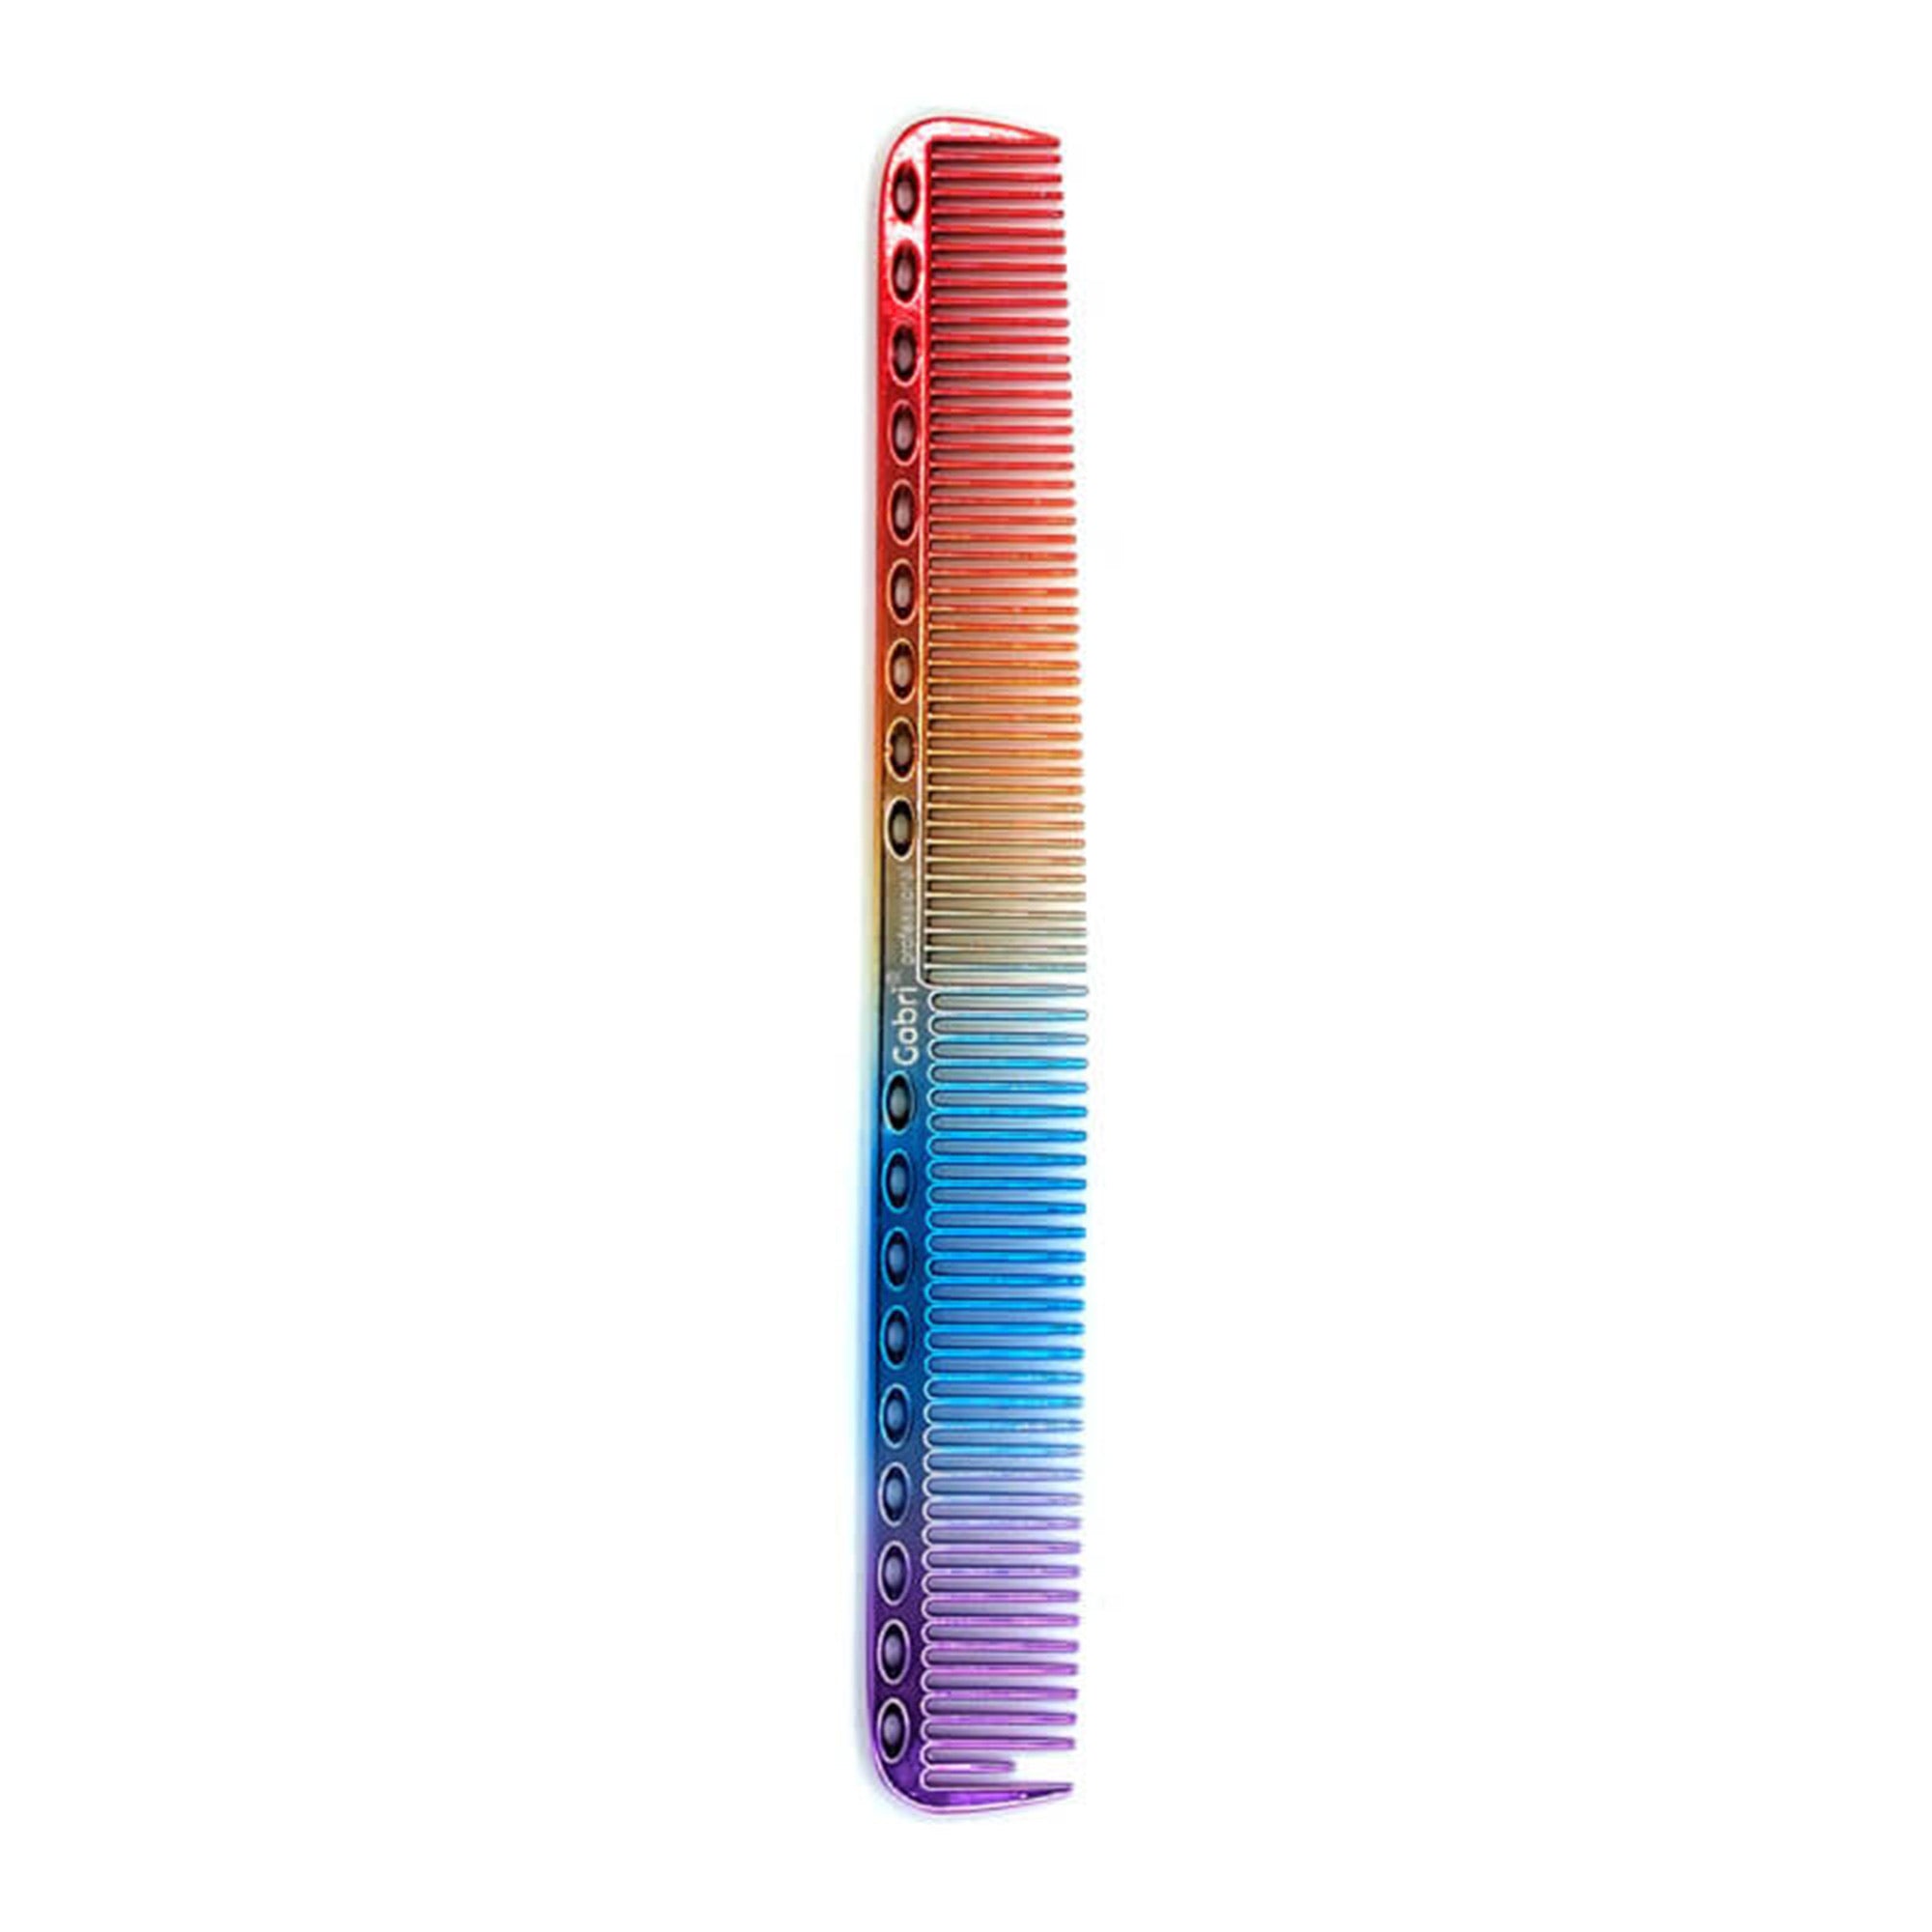 Gabri - Metal Hair Cutting Comb Rainbow 21cm